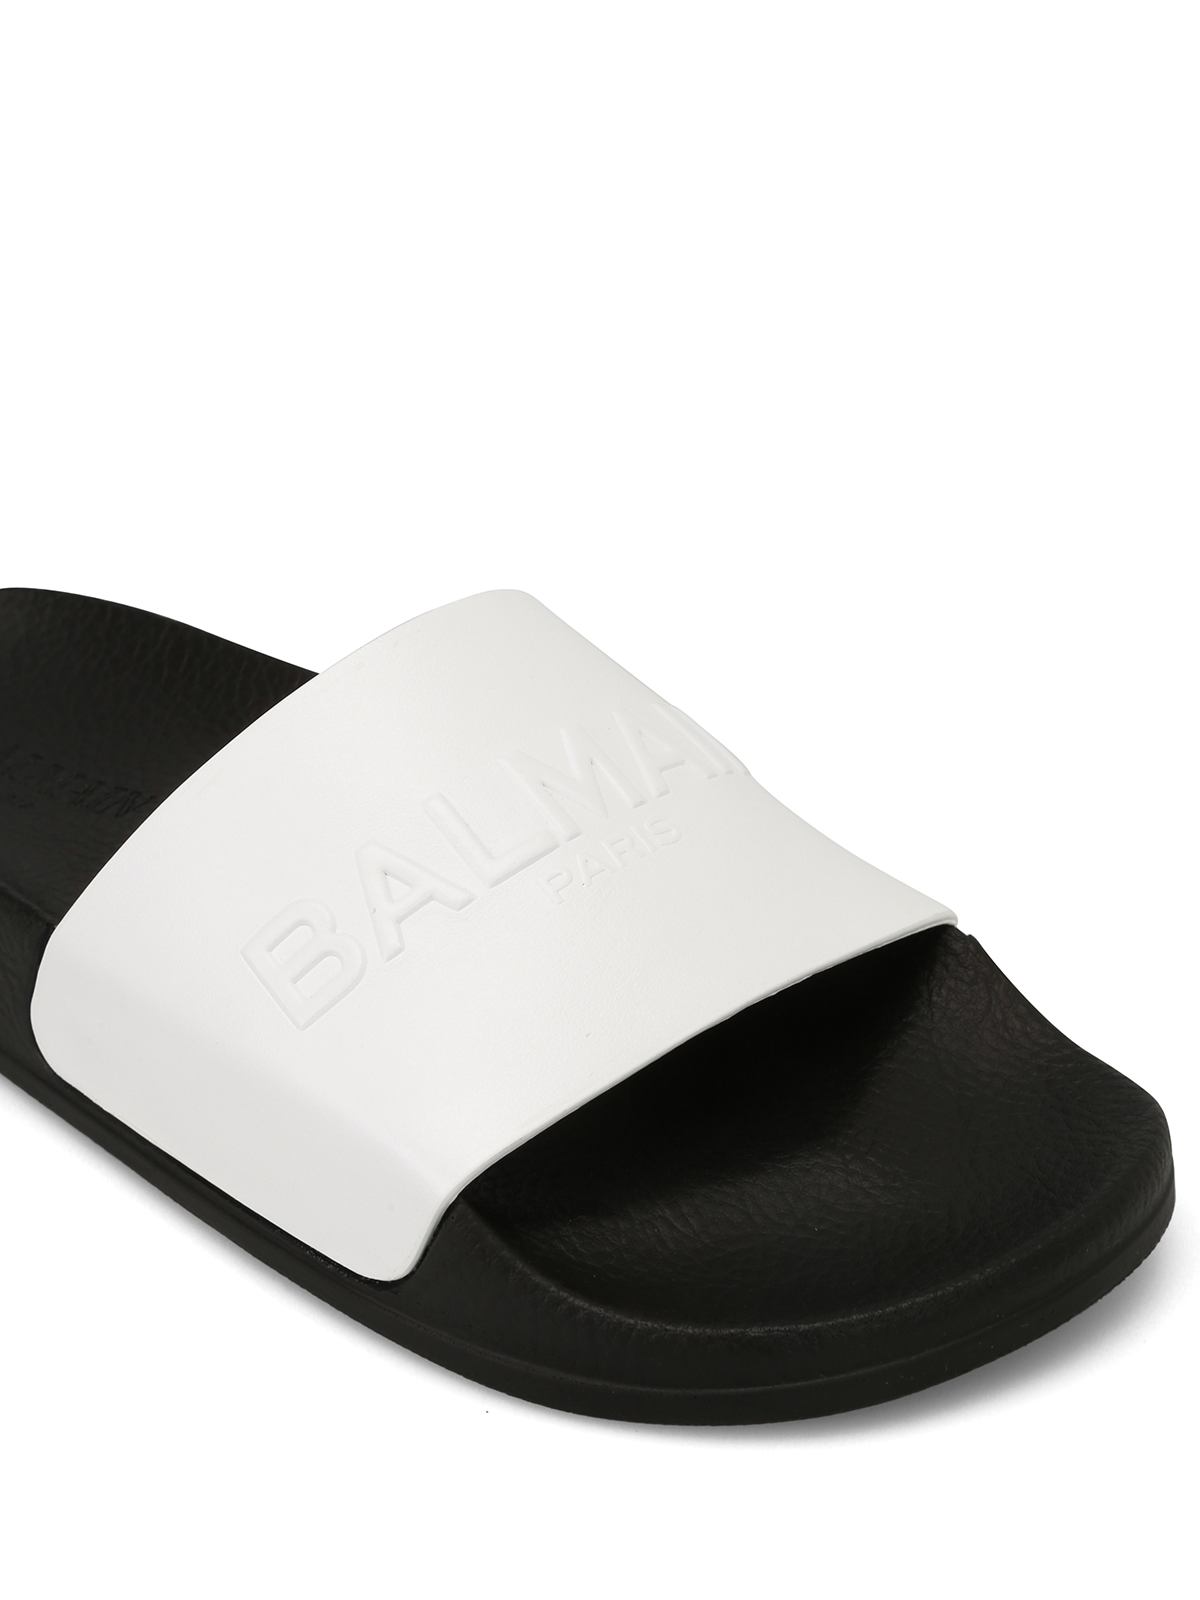 Sandals Balmain - logo sandals - S8FC140PVSY100 iKRIX.com